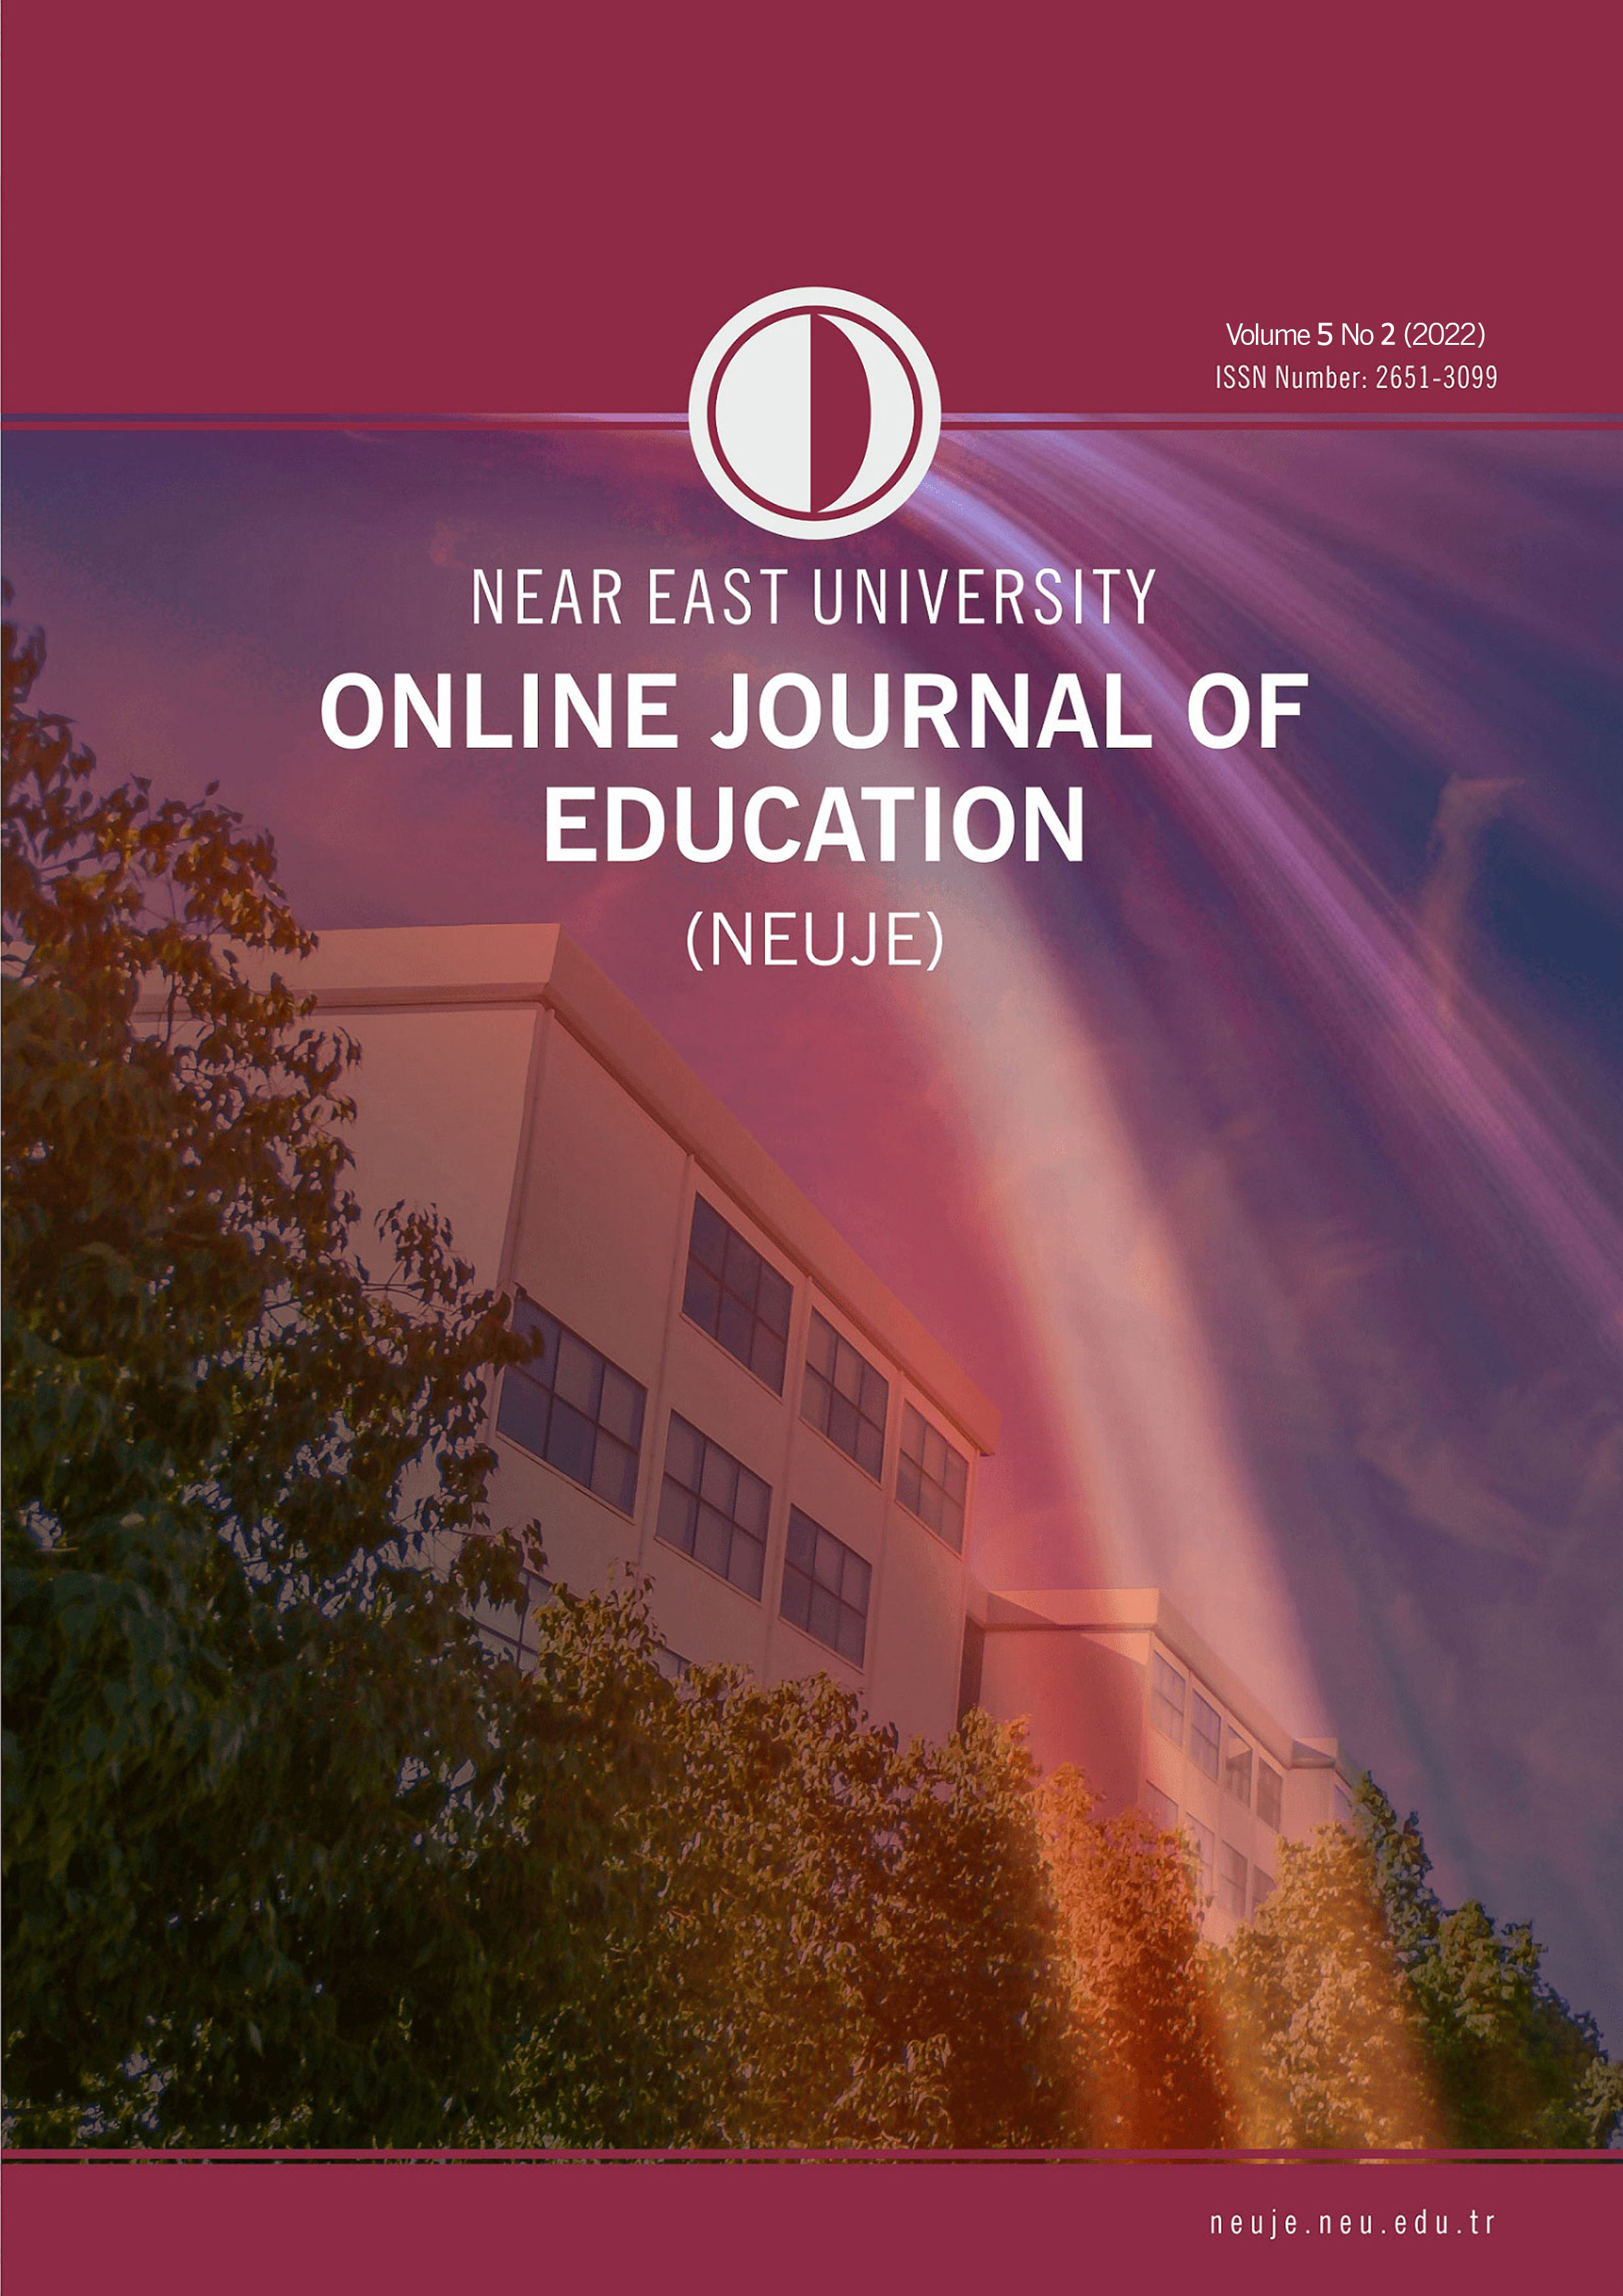 					View Vol. 5 No. 2 (2022): Near East University Online Journal of Education - NEUJE
				